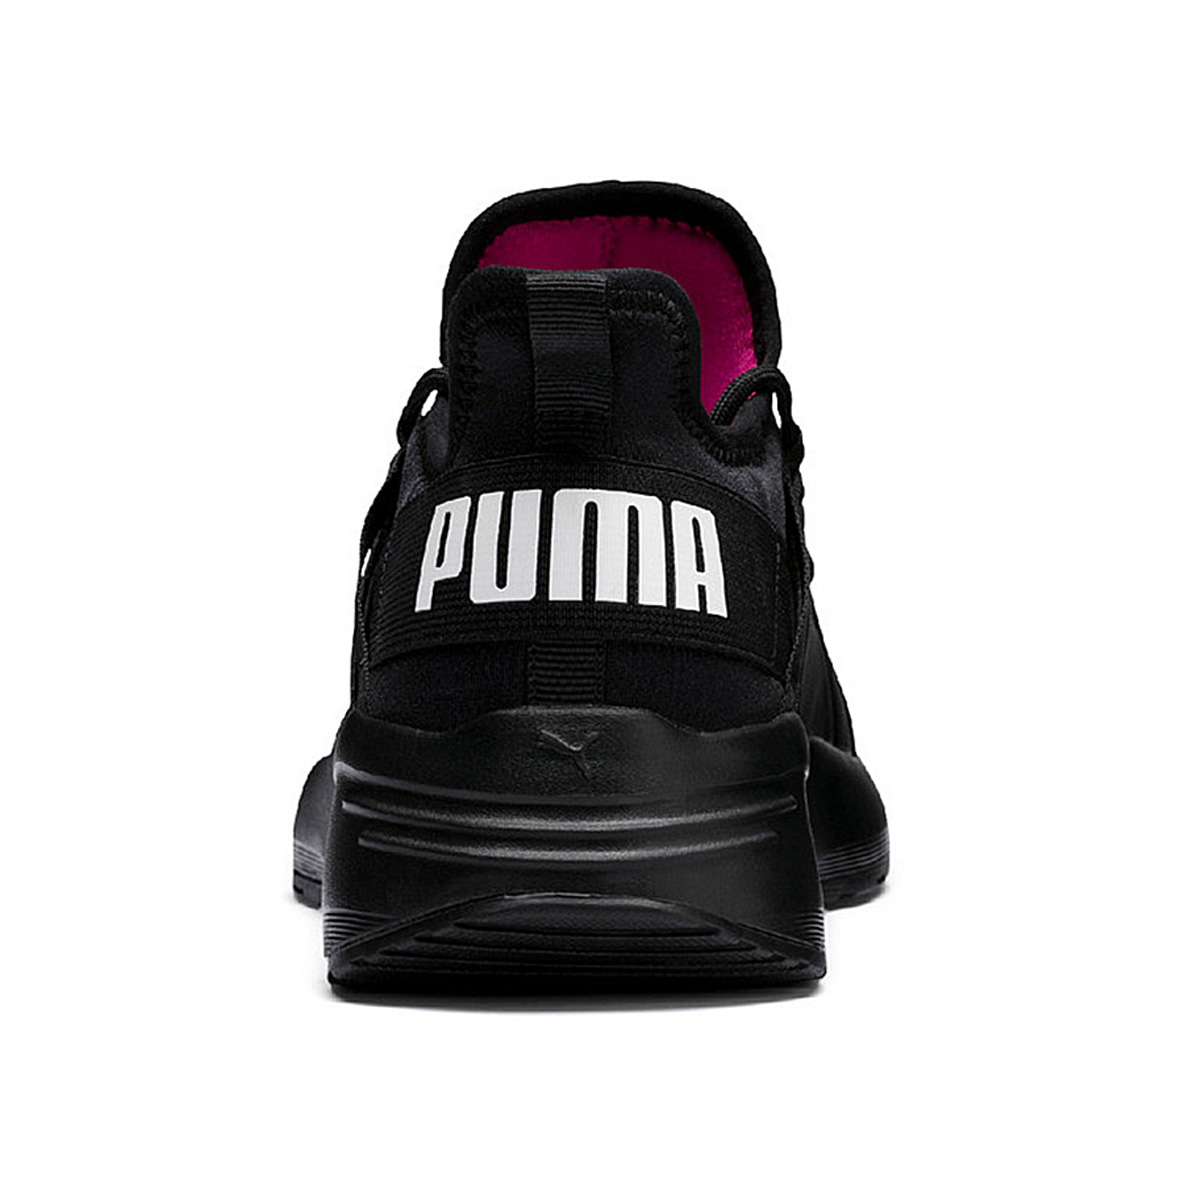 Puma Sirena WNs Damen Sneaker Laufschuh Fitness schwarz 369138 01